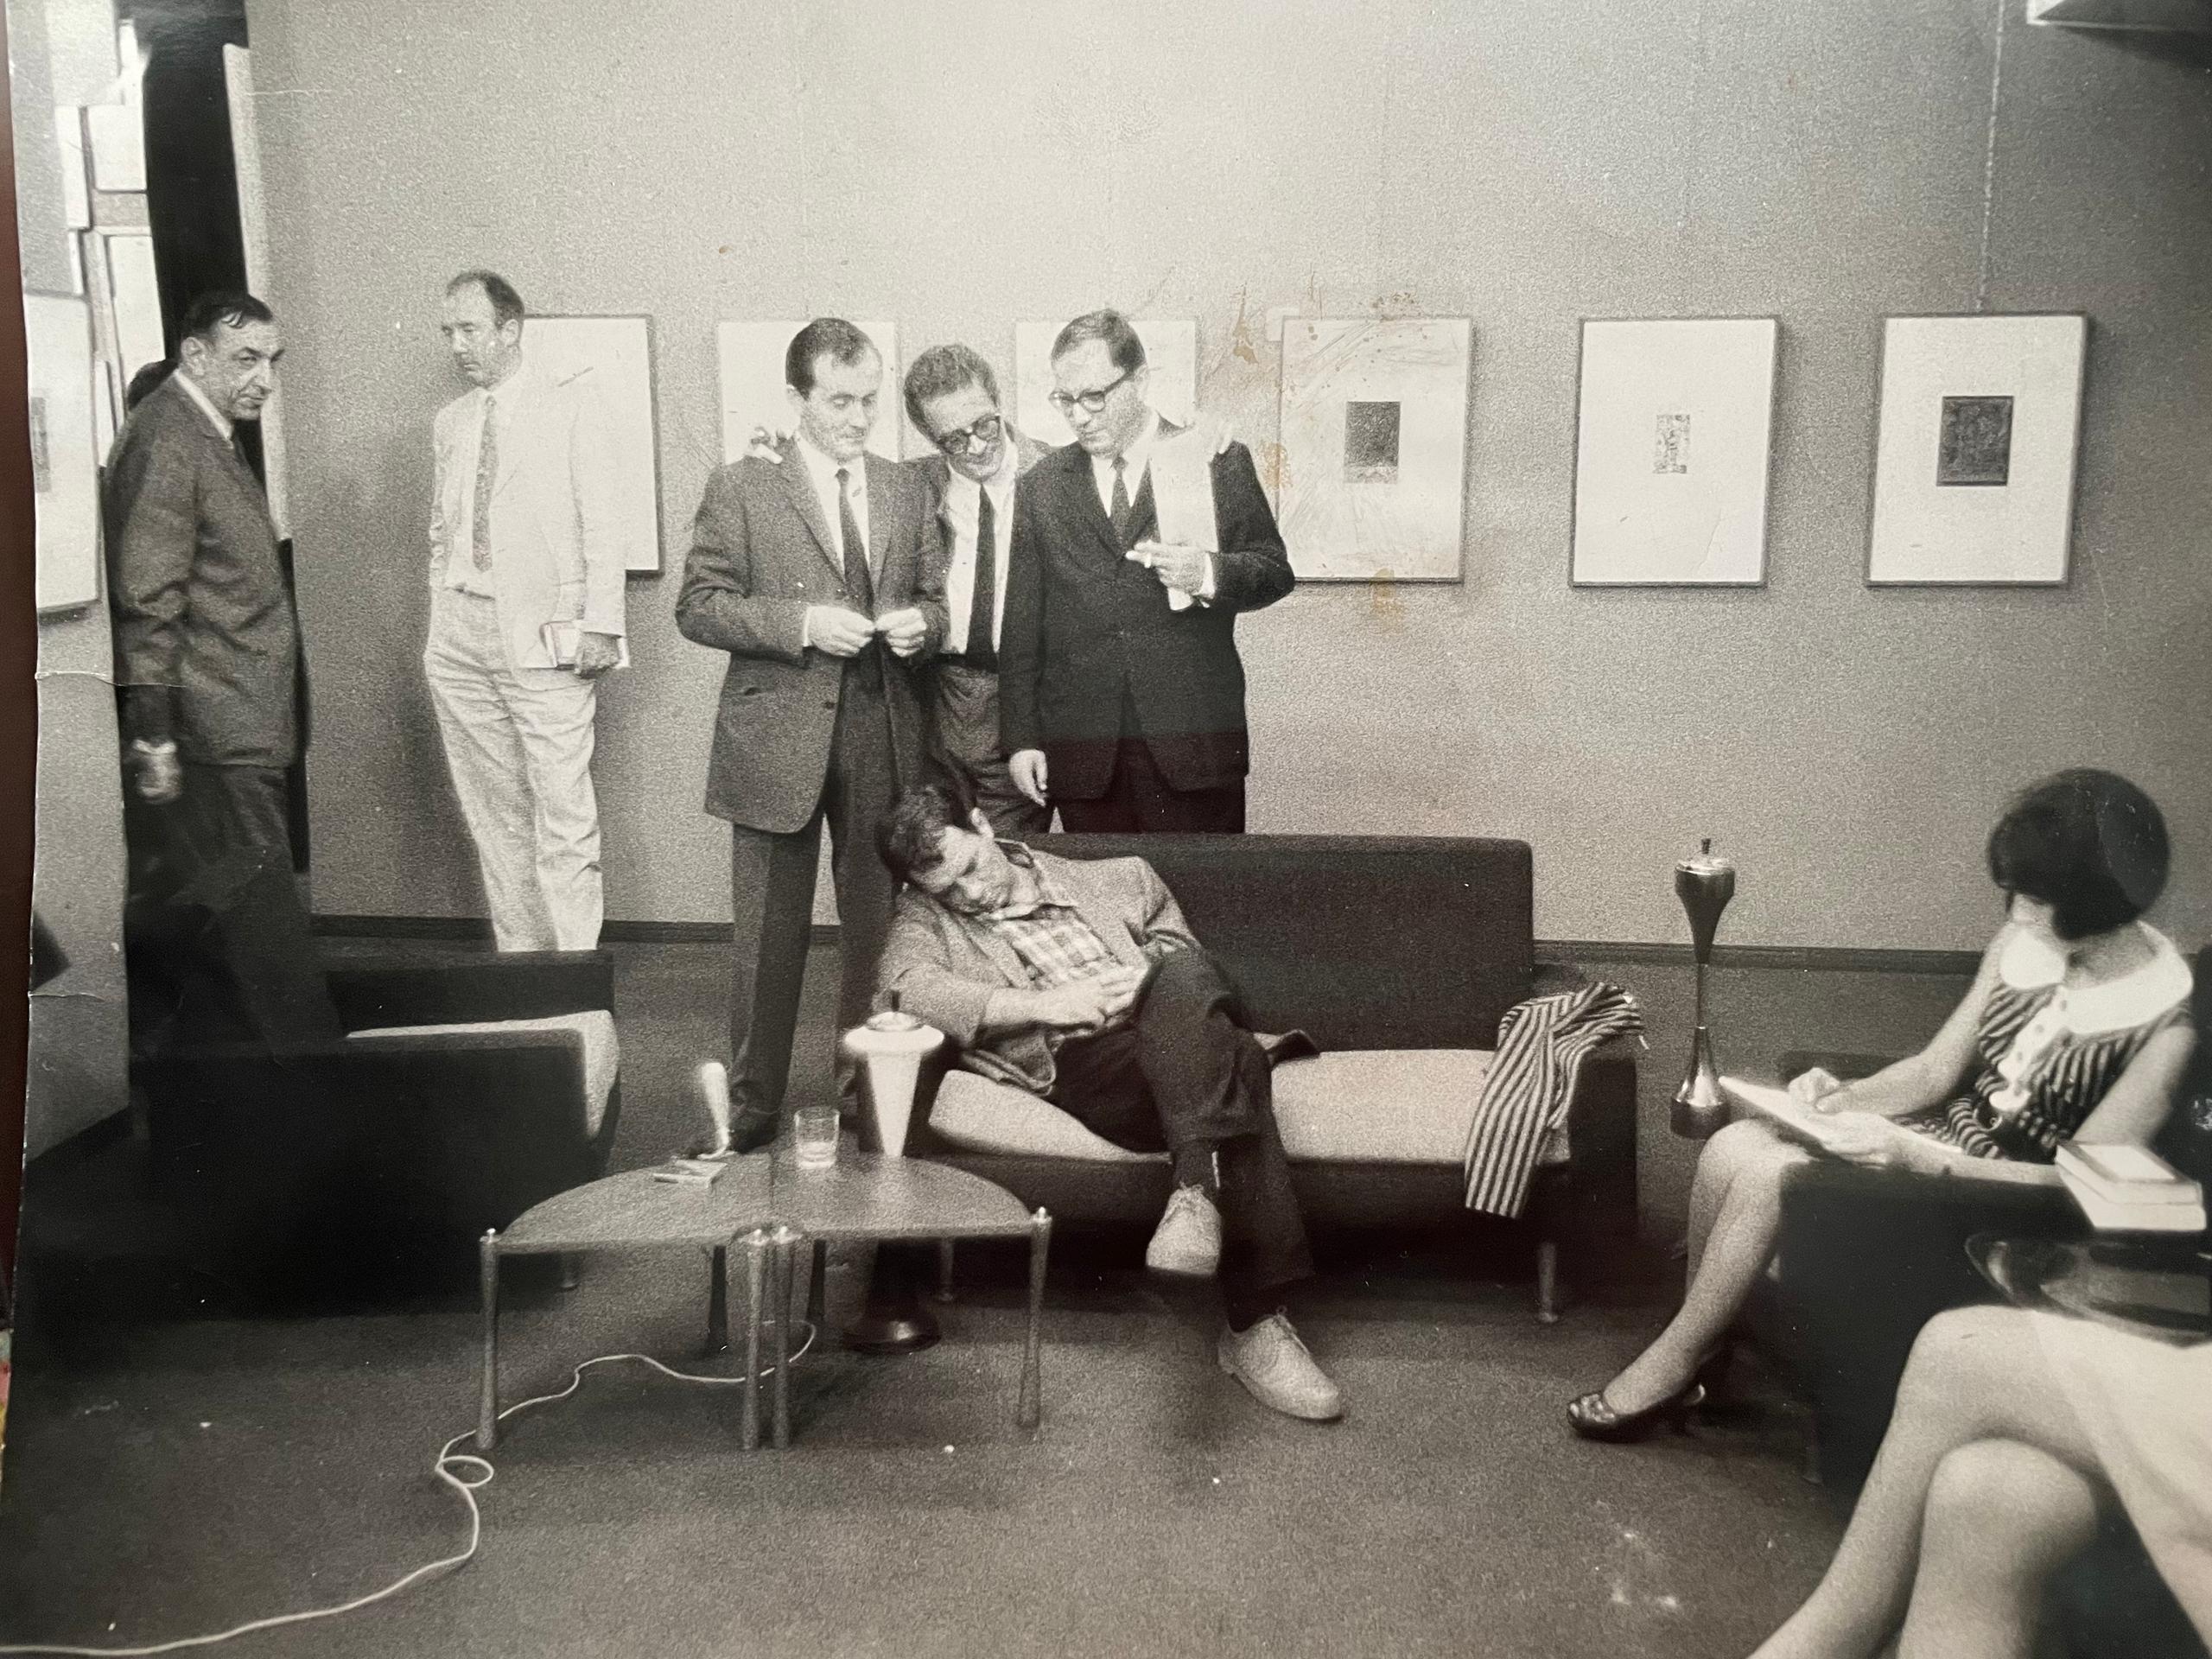 Kerouac sleeping in a reception